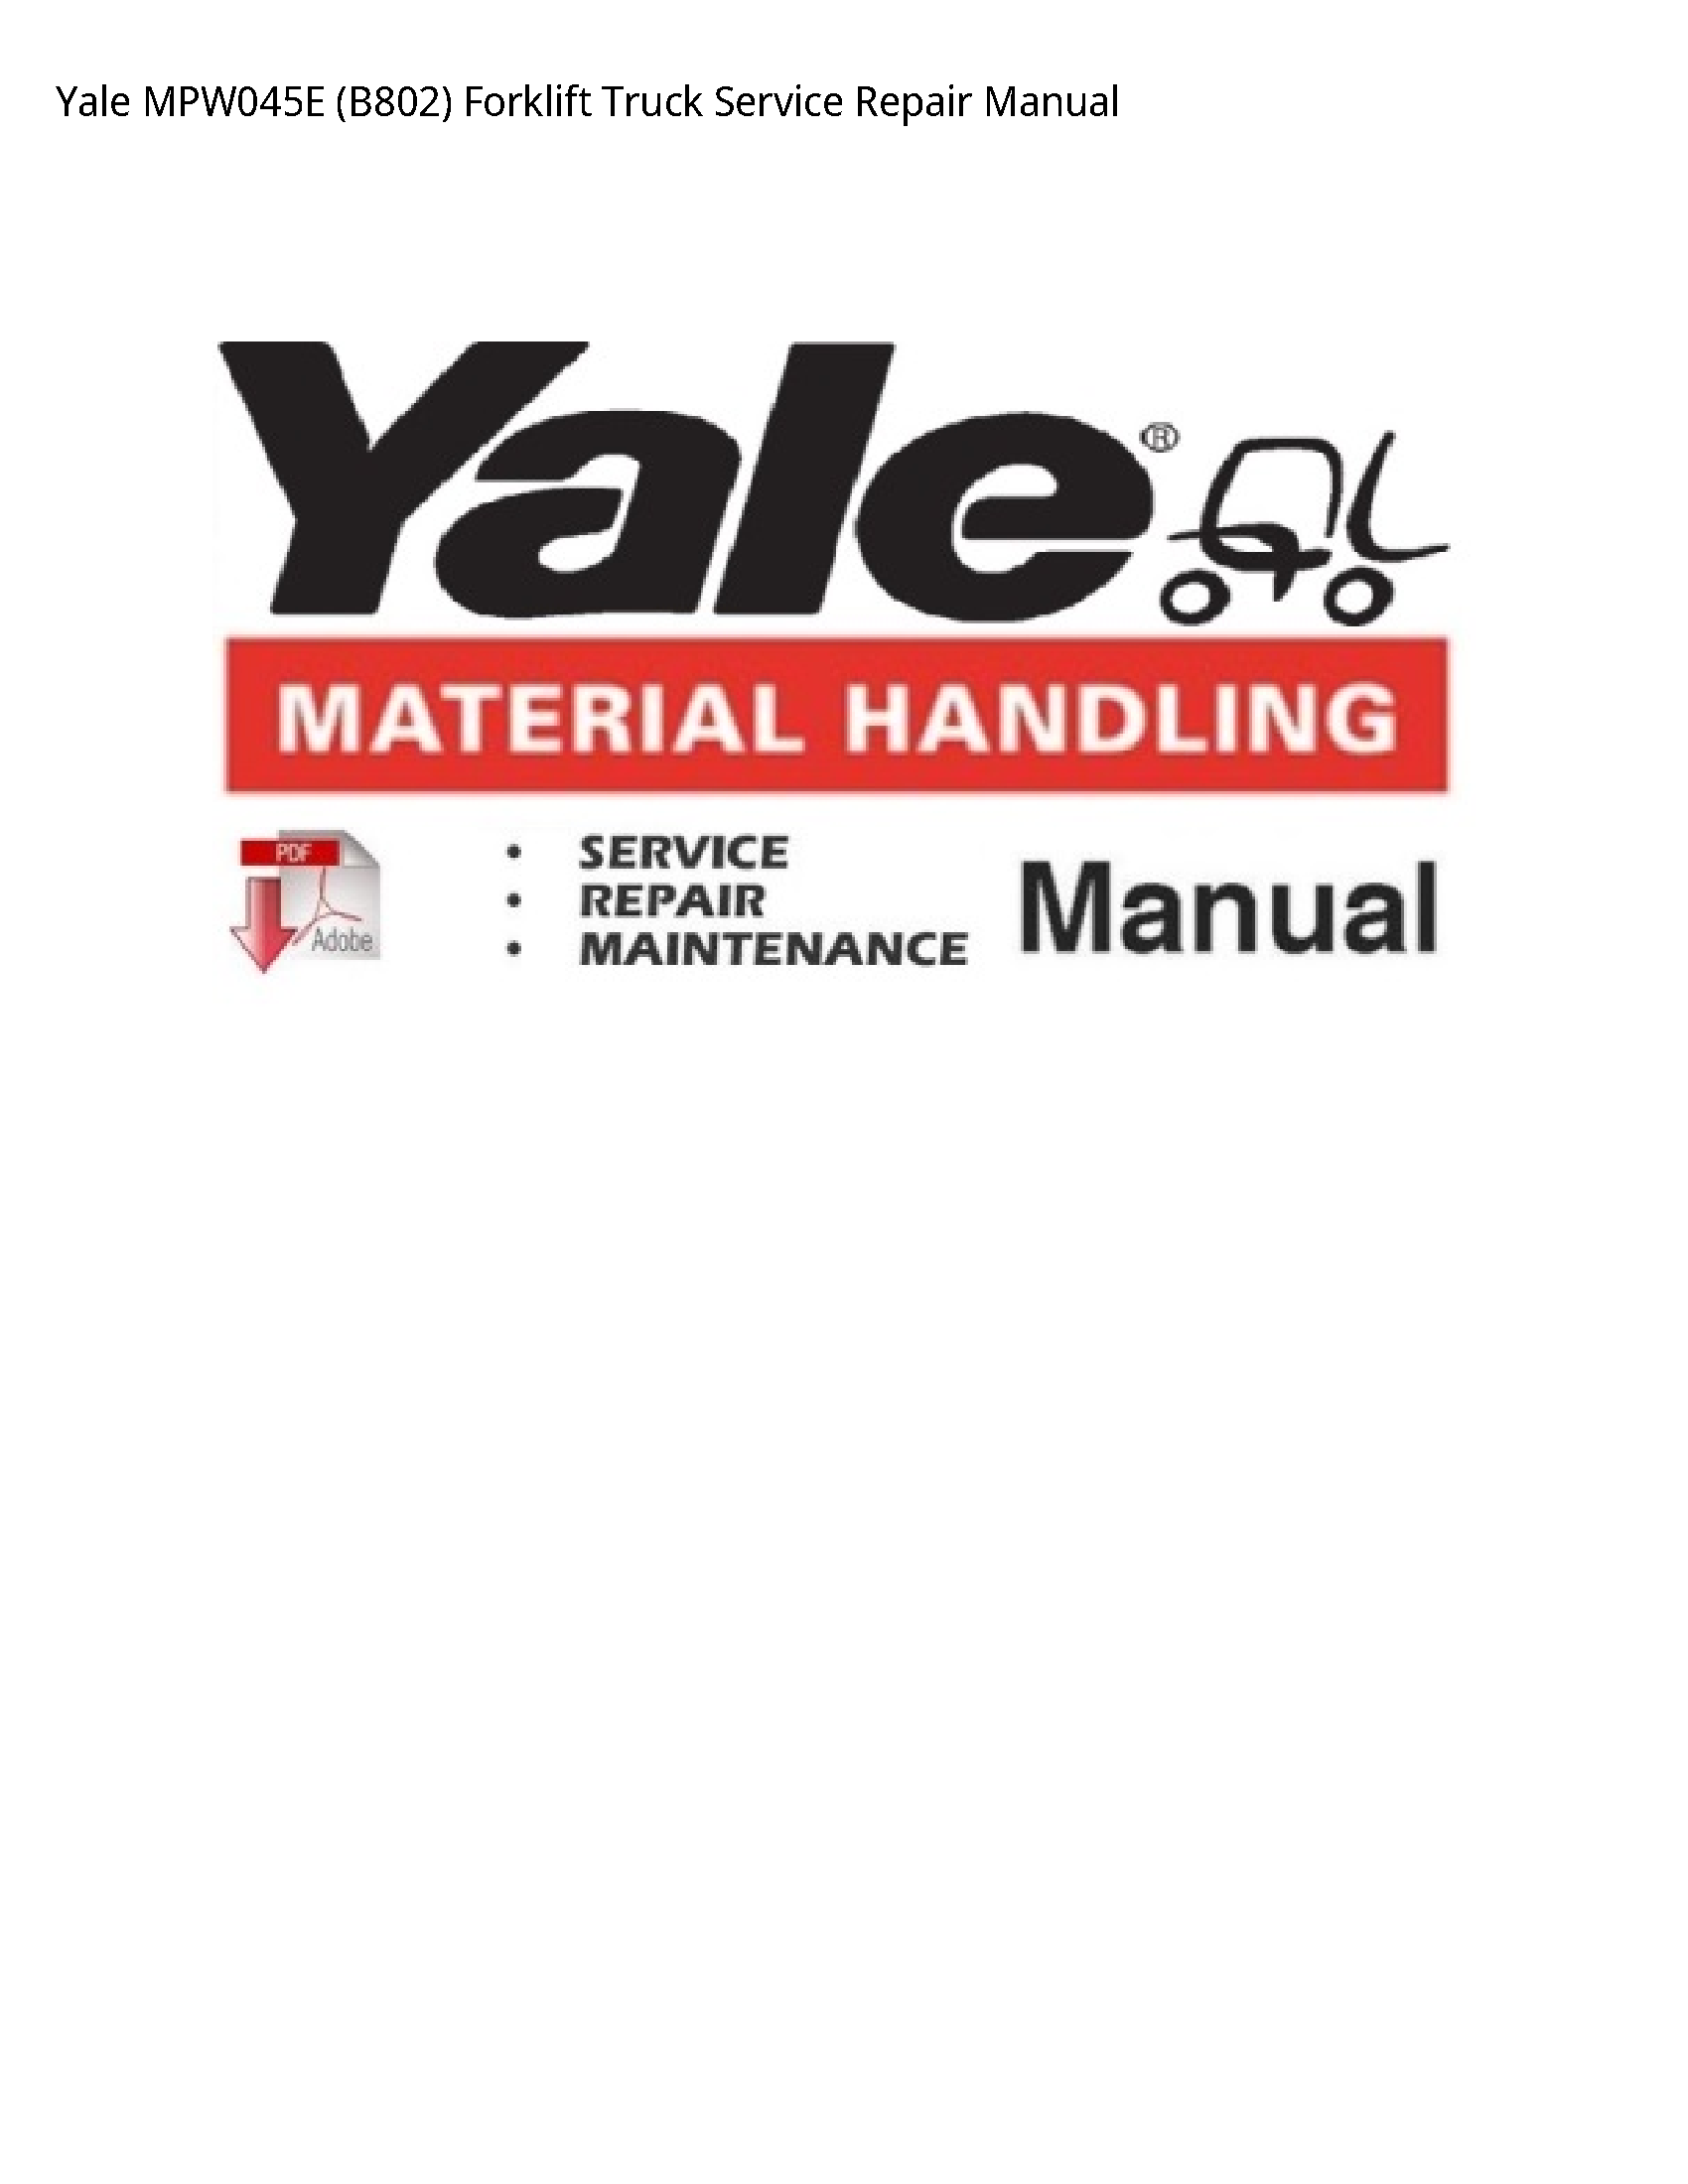 Yale MPW045E Forklift Truck manual